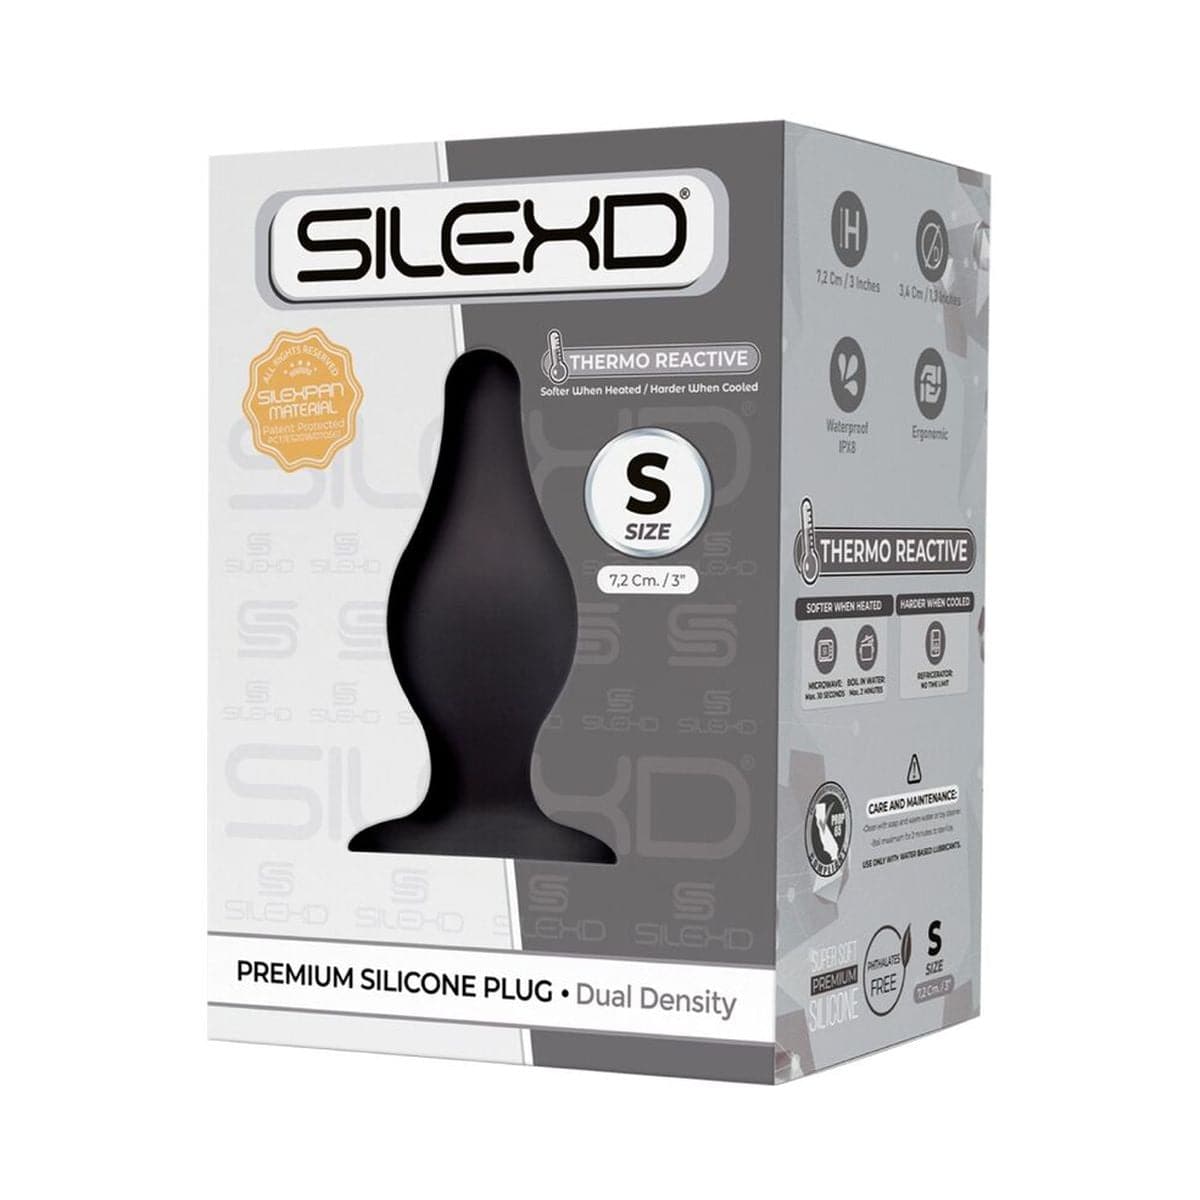 Plug Anal Silexd 2 Premium Silicone S, 7.2cm Ø3.4cm